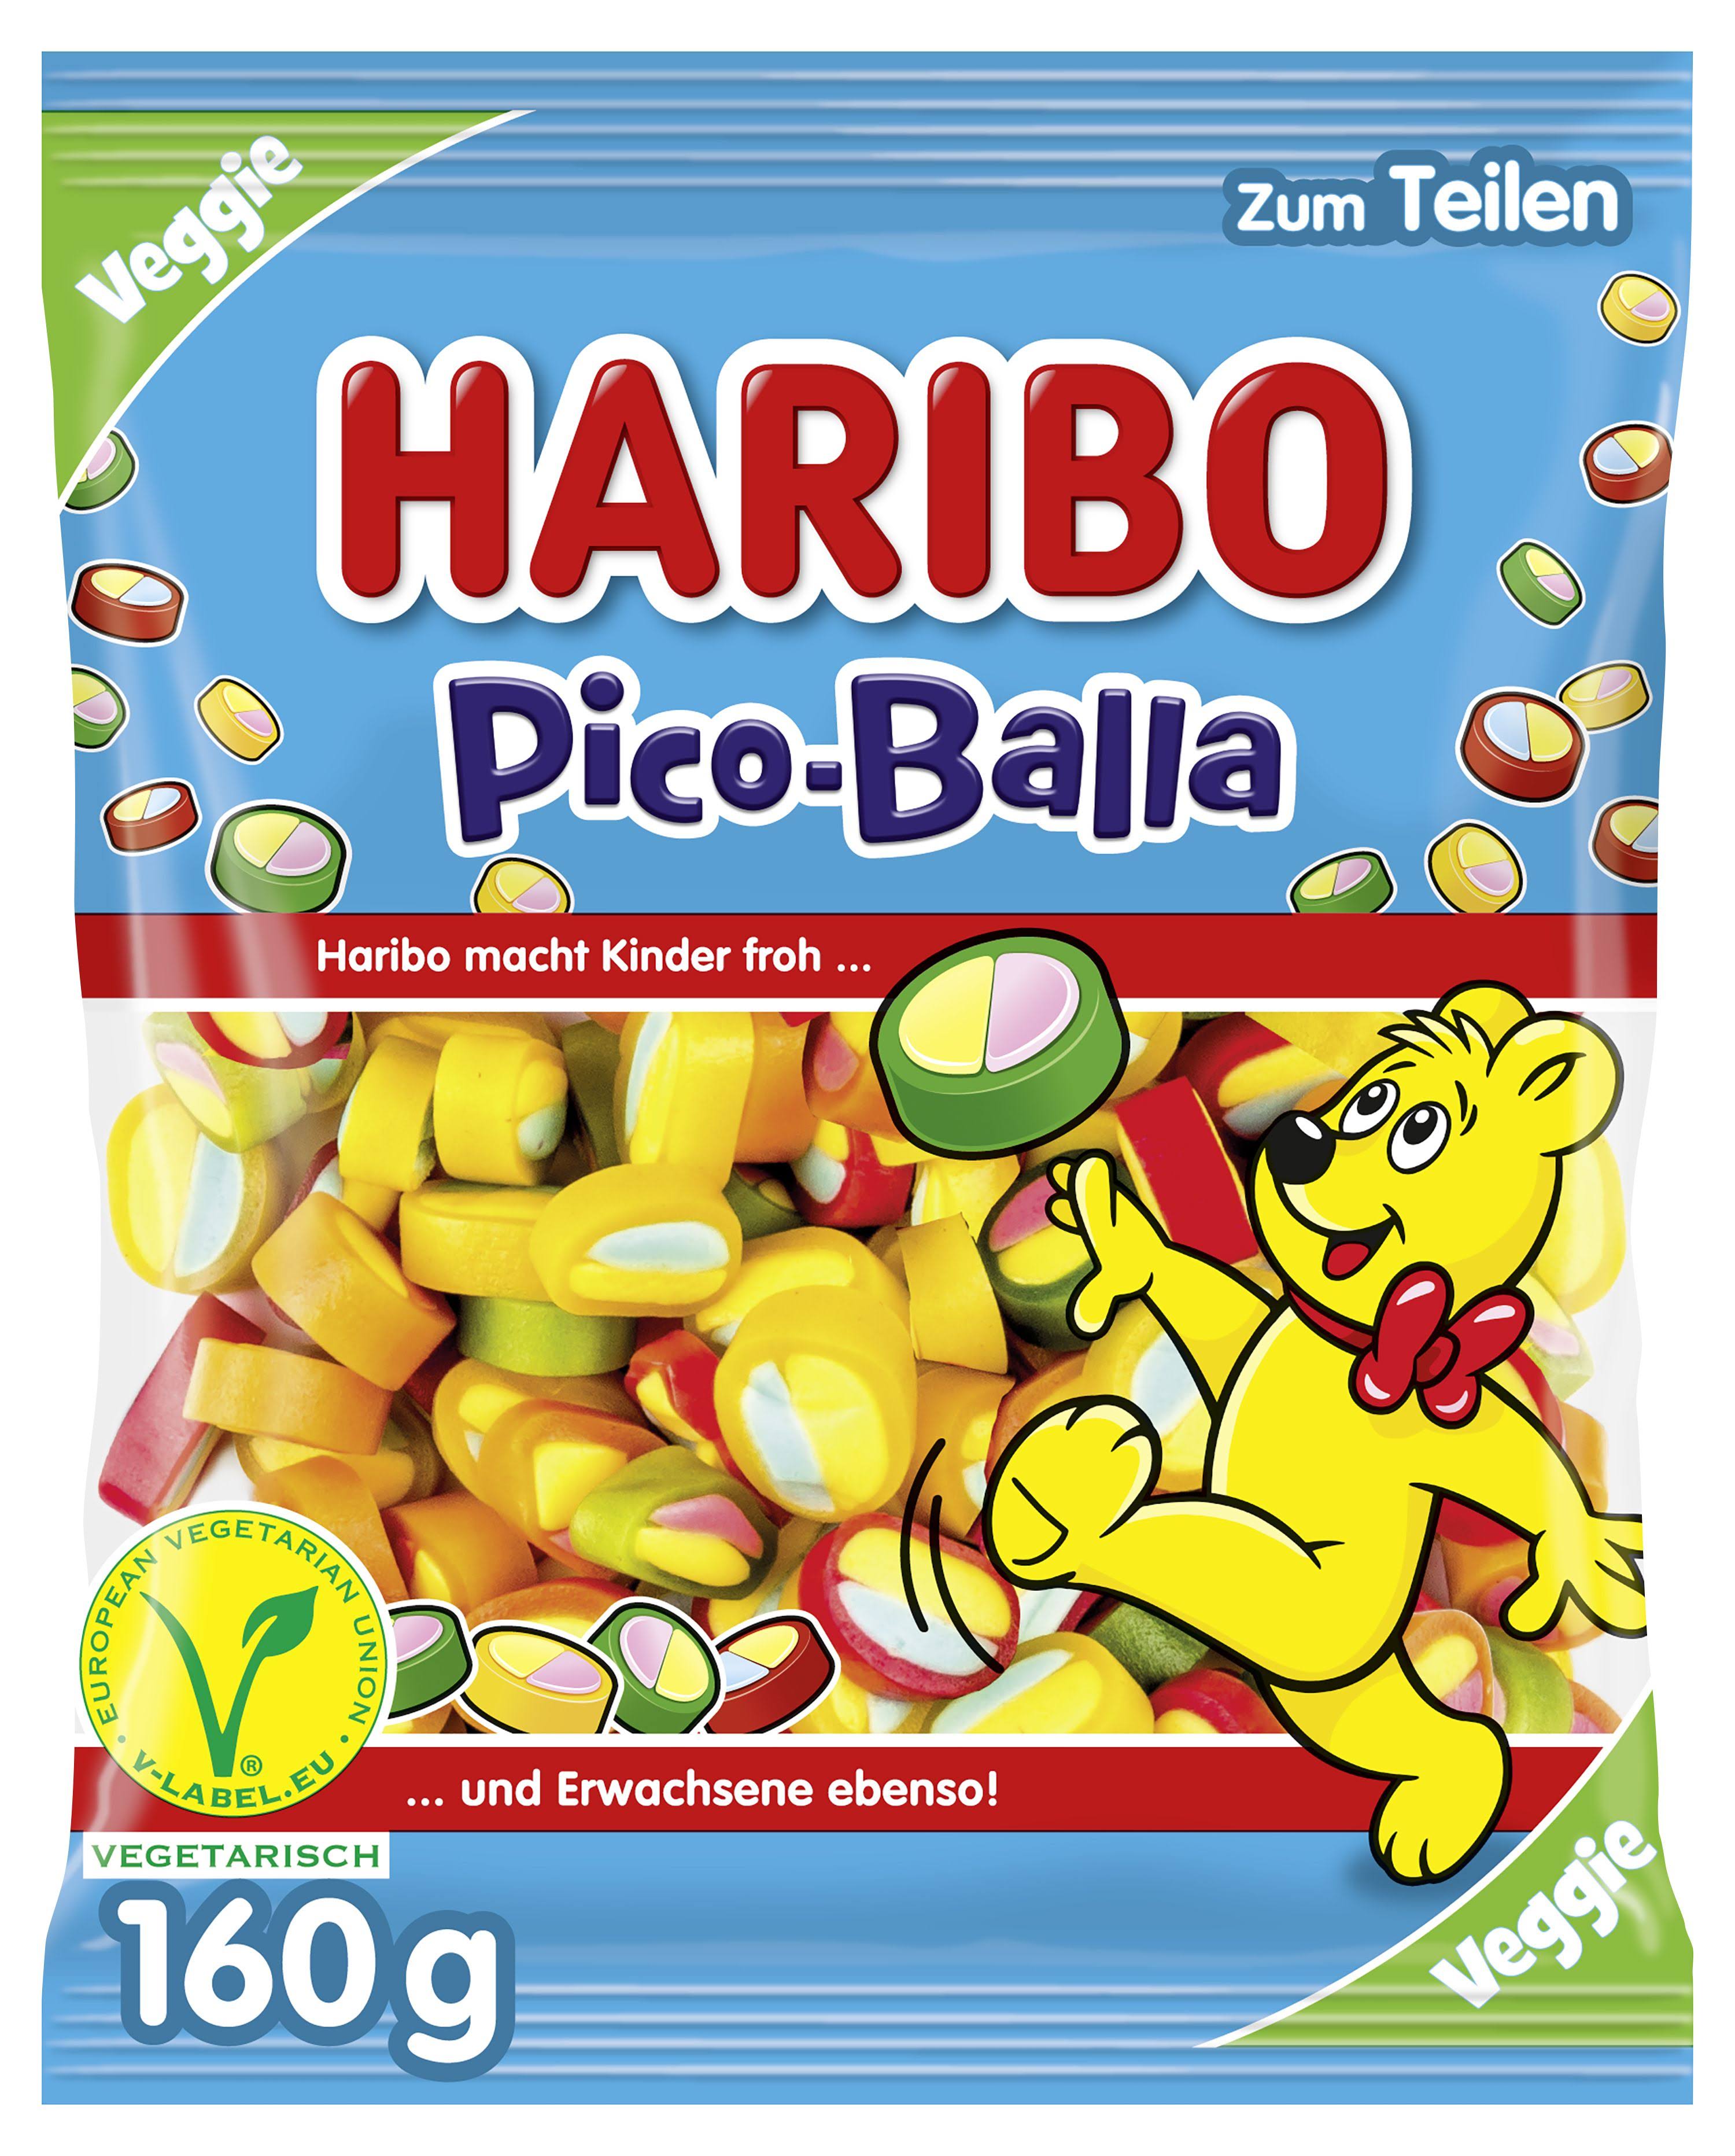 Haribo Pico-Balla - Share Size (160g)